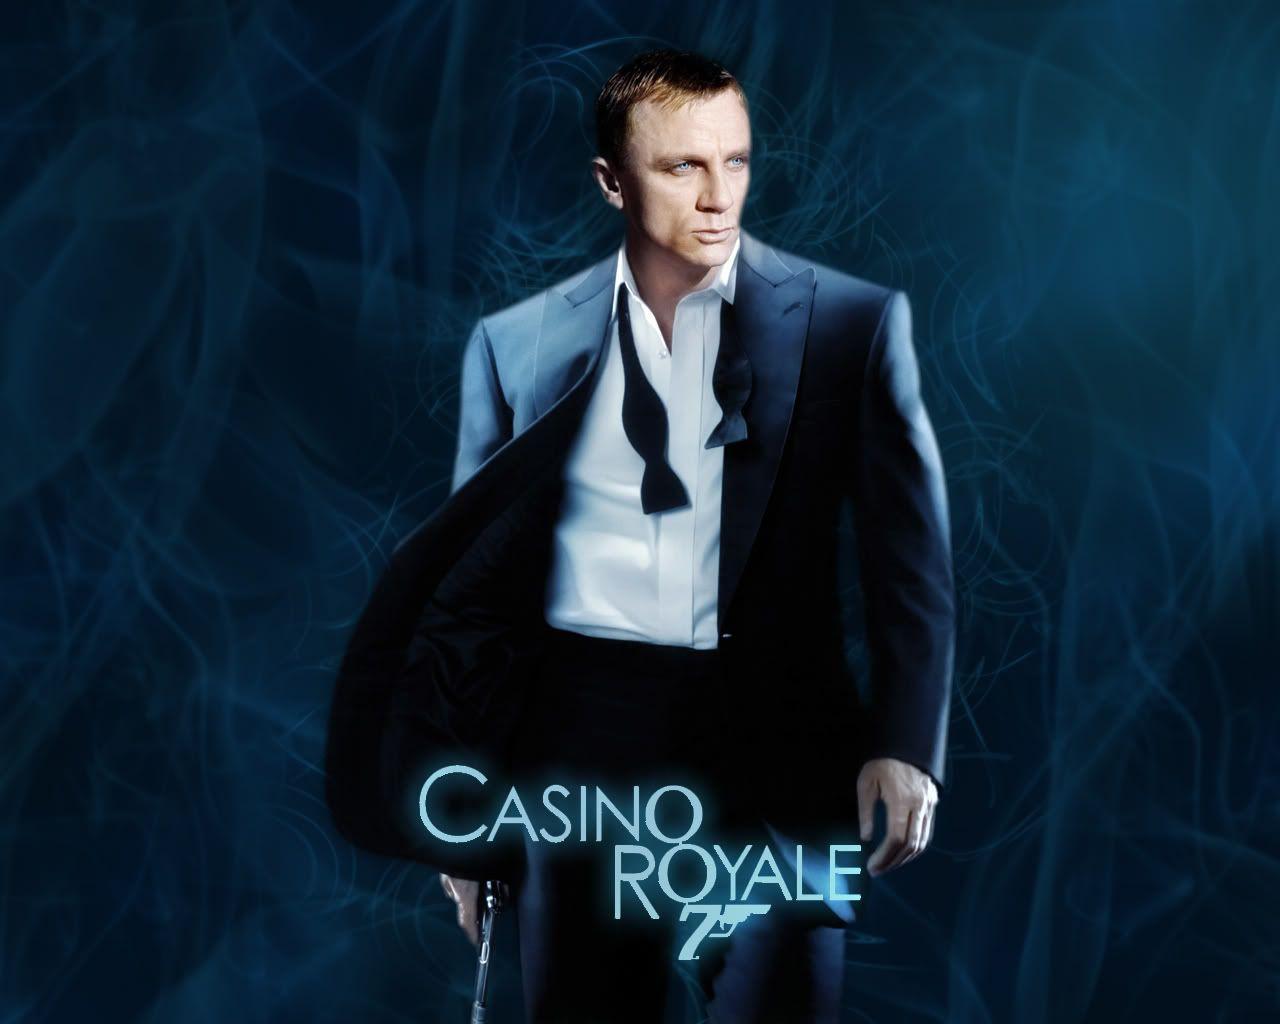 casino royale stream online free 4k